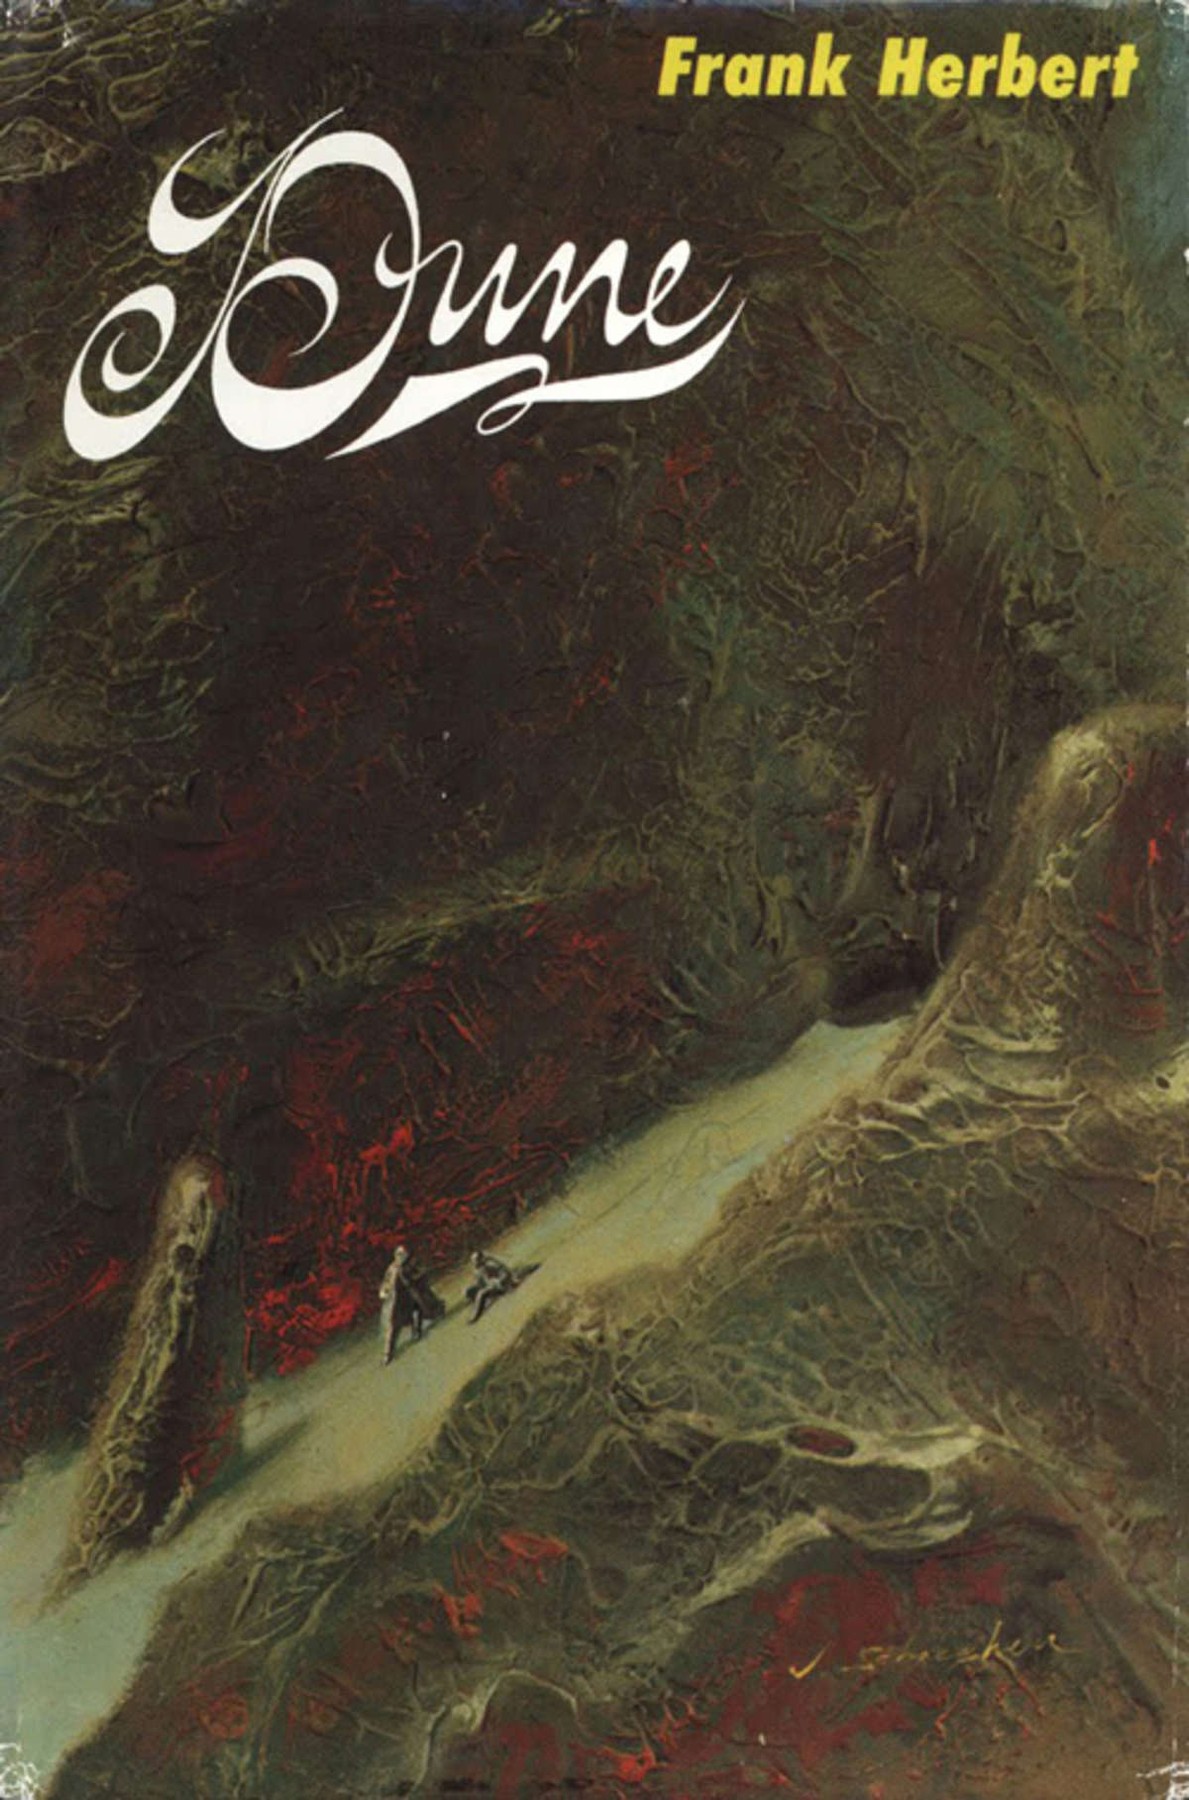 1965 Chilton Books hardcover first edition book cover of Dune by Frank Herbert, art by John Schoenherr